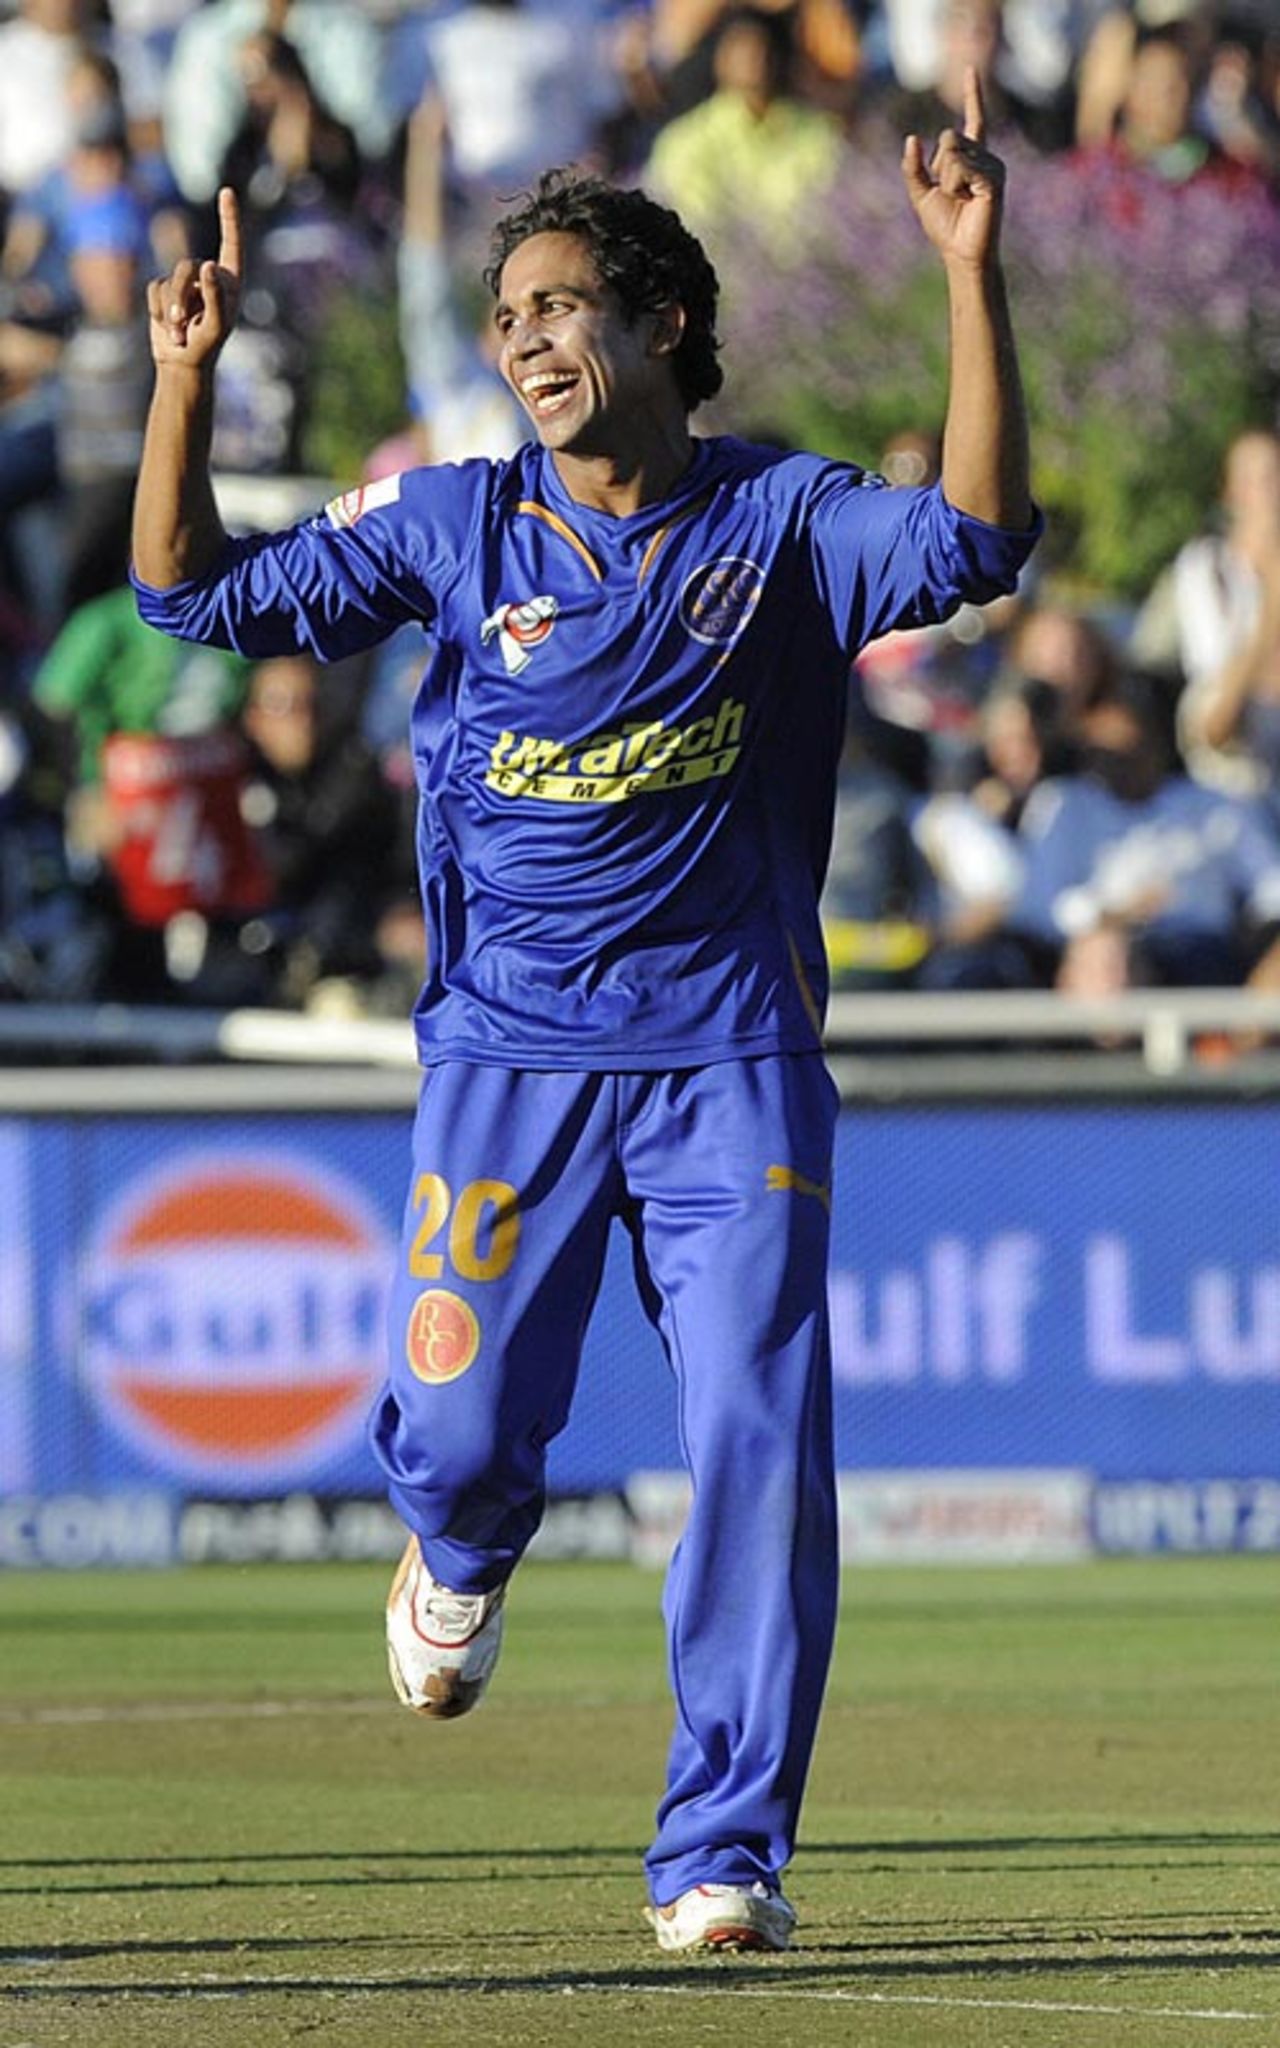 Kamran Khan is pleased after dismissing Ravi Bopara, Rajasthan Royals v Kings XI Punjab, Cape Town, April 26, 2009